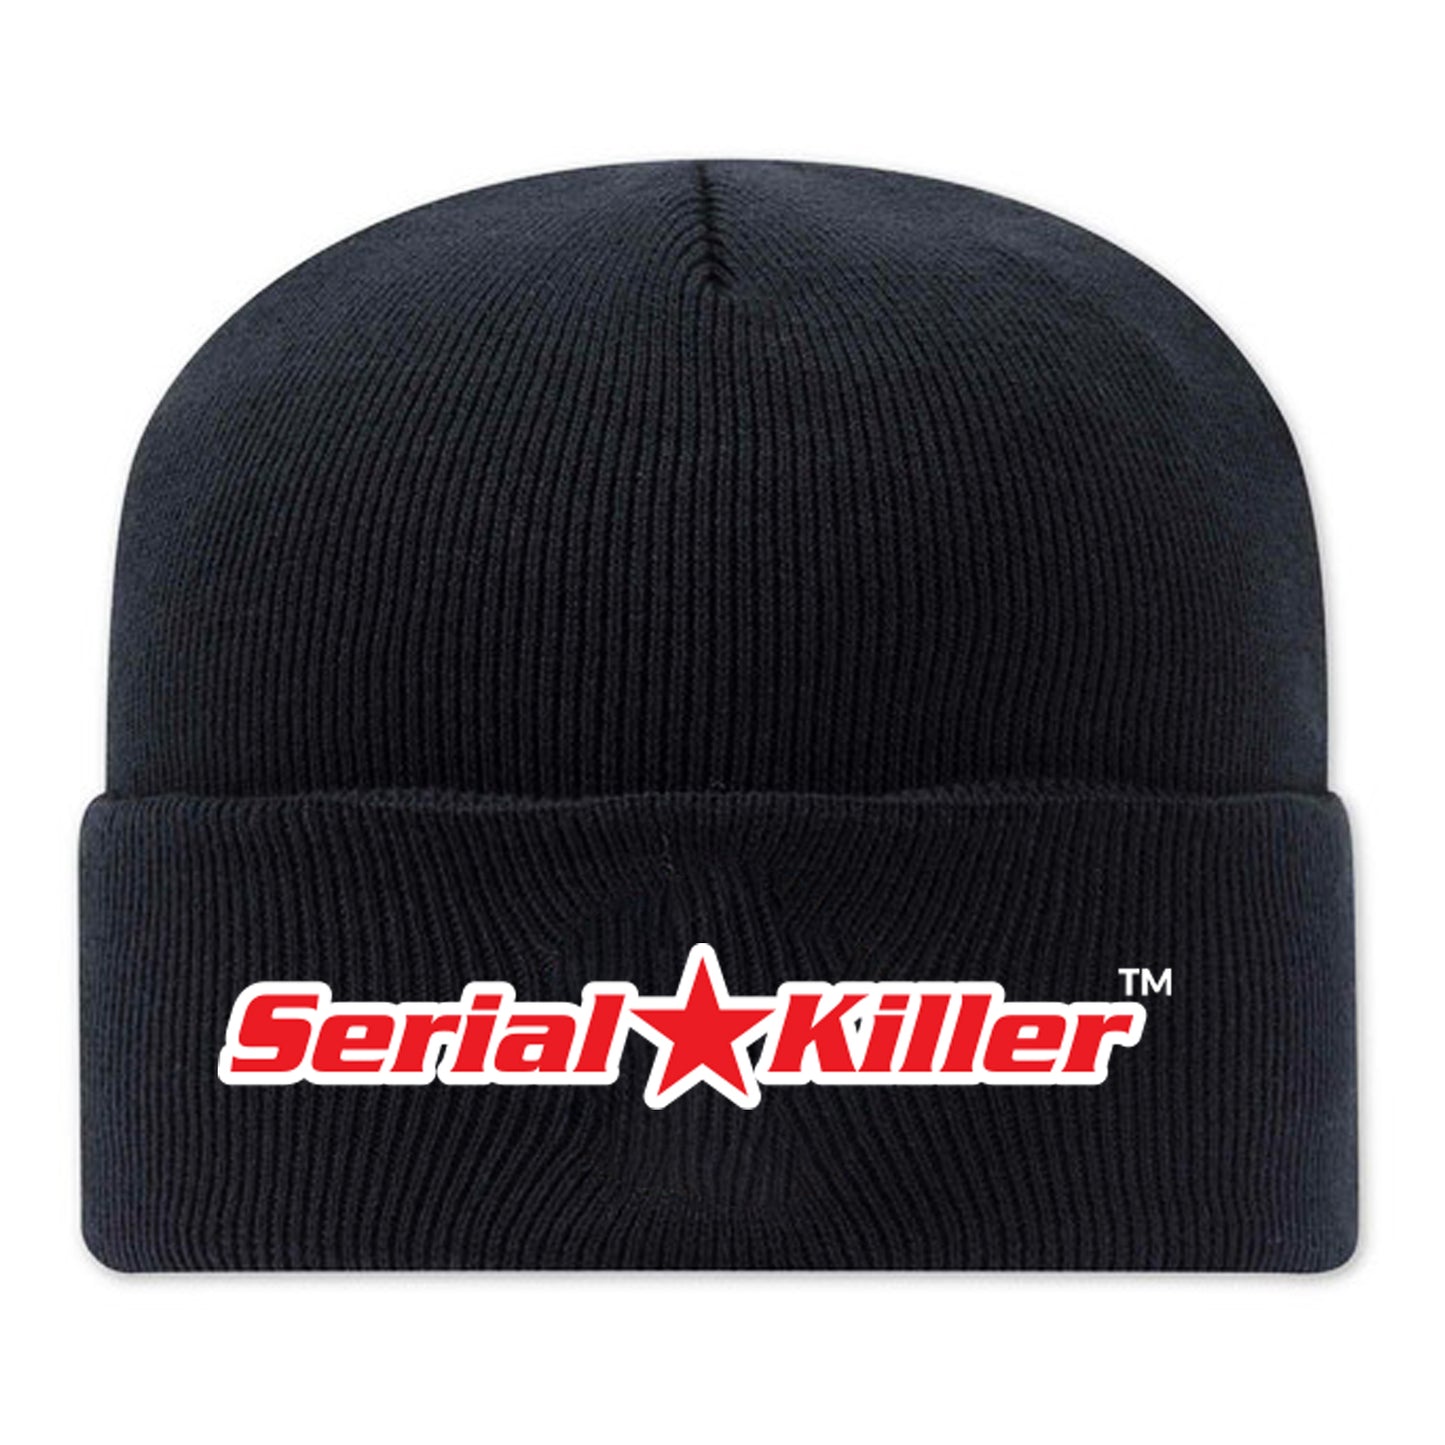 Serial Star Killer Logo Beanie